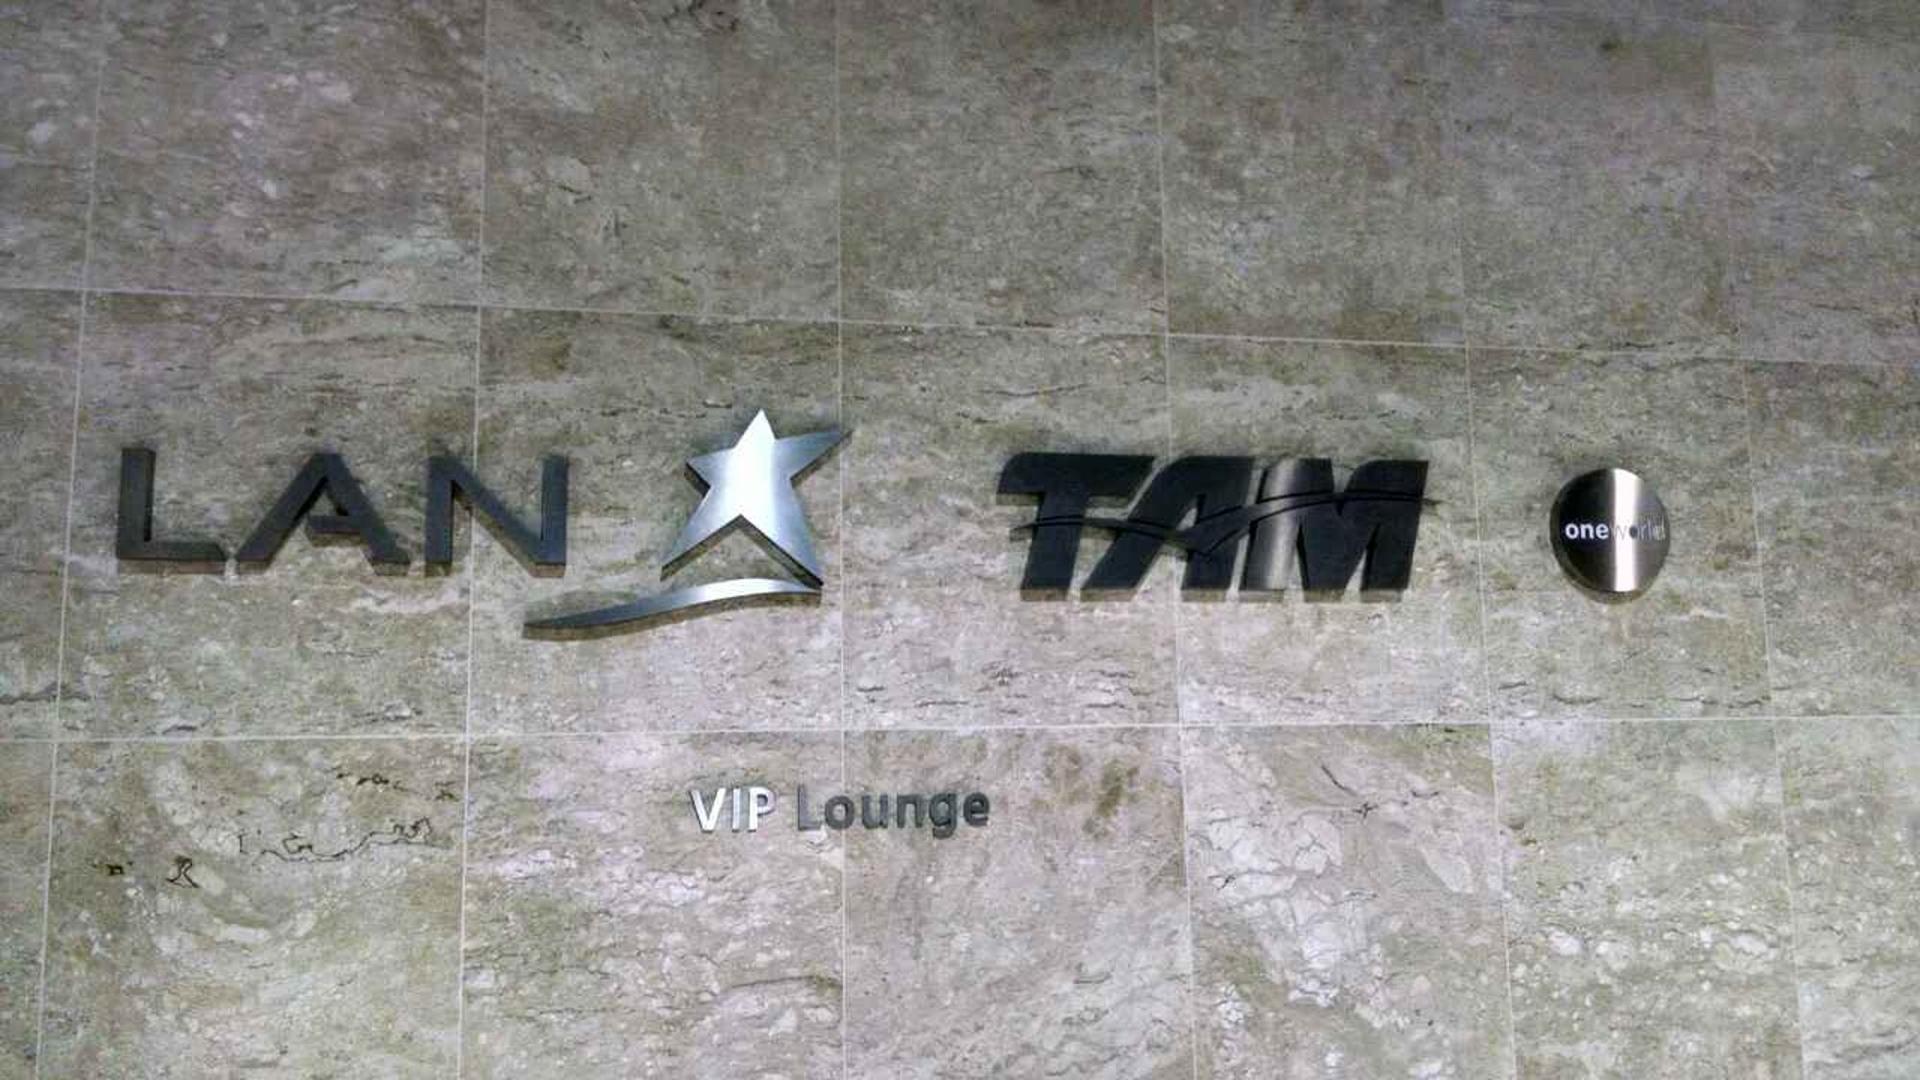 LATAM VIP Lounge image 47 of 47